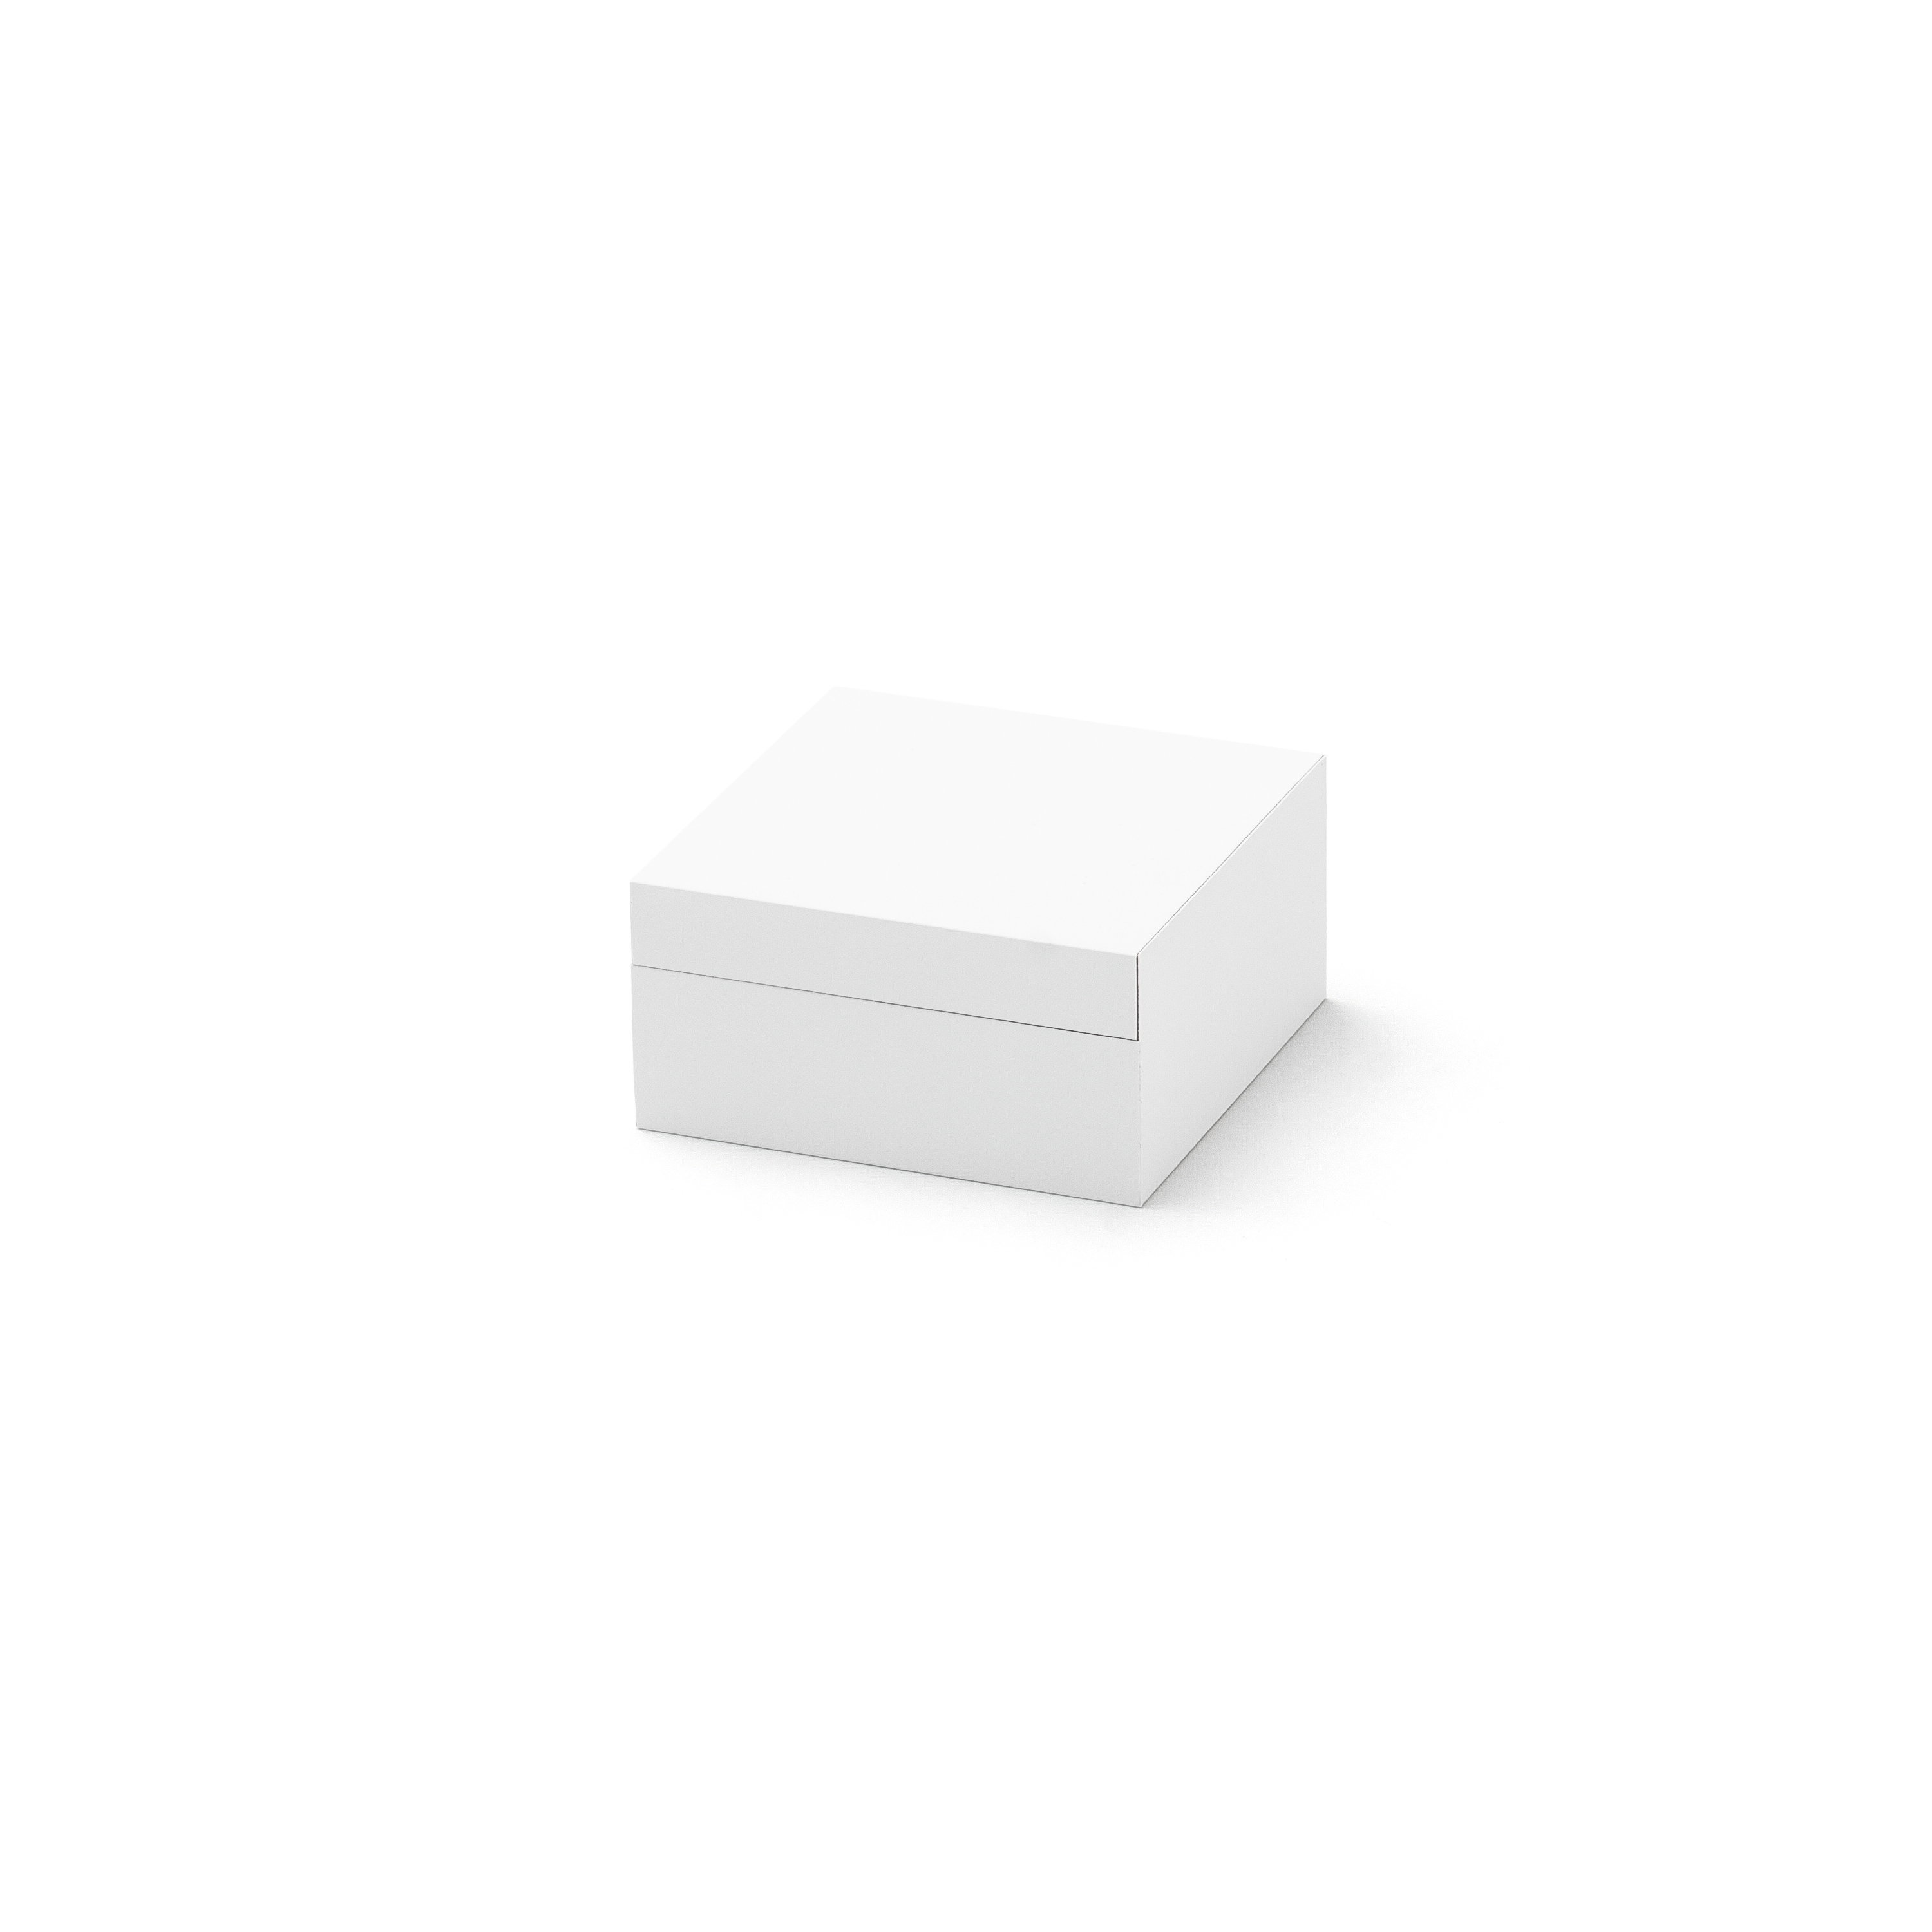 WHITEBOX universal small